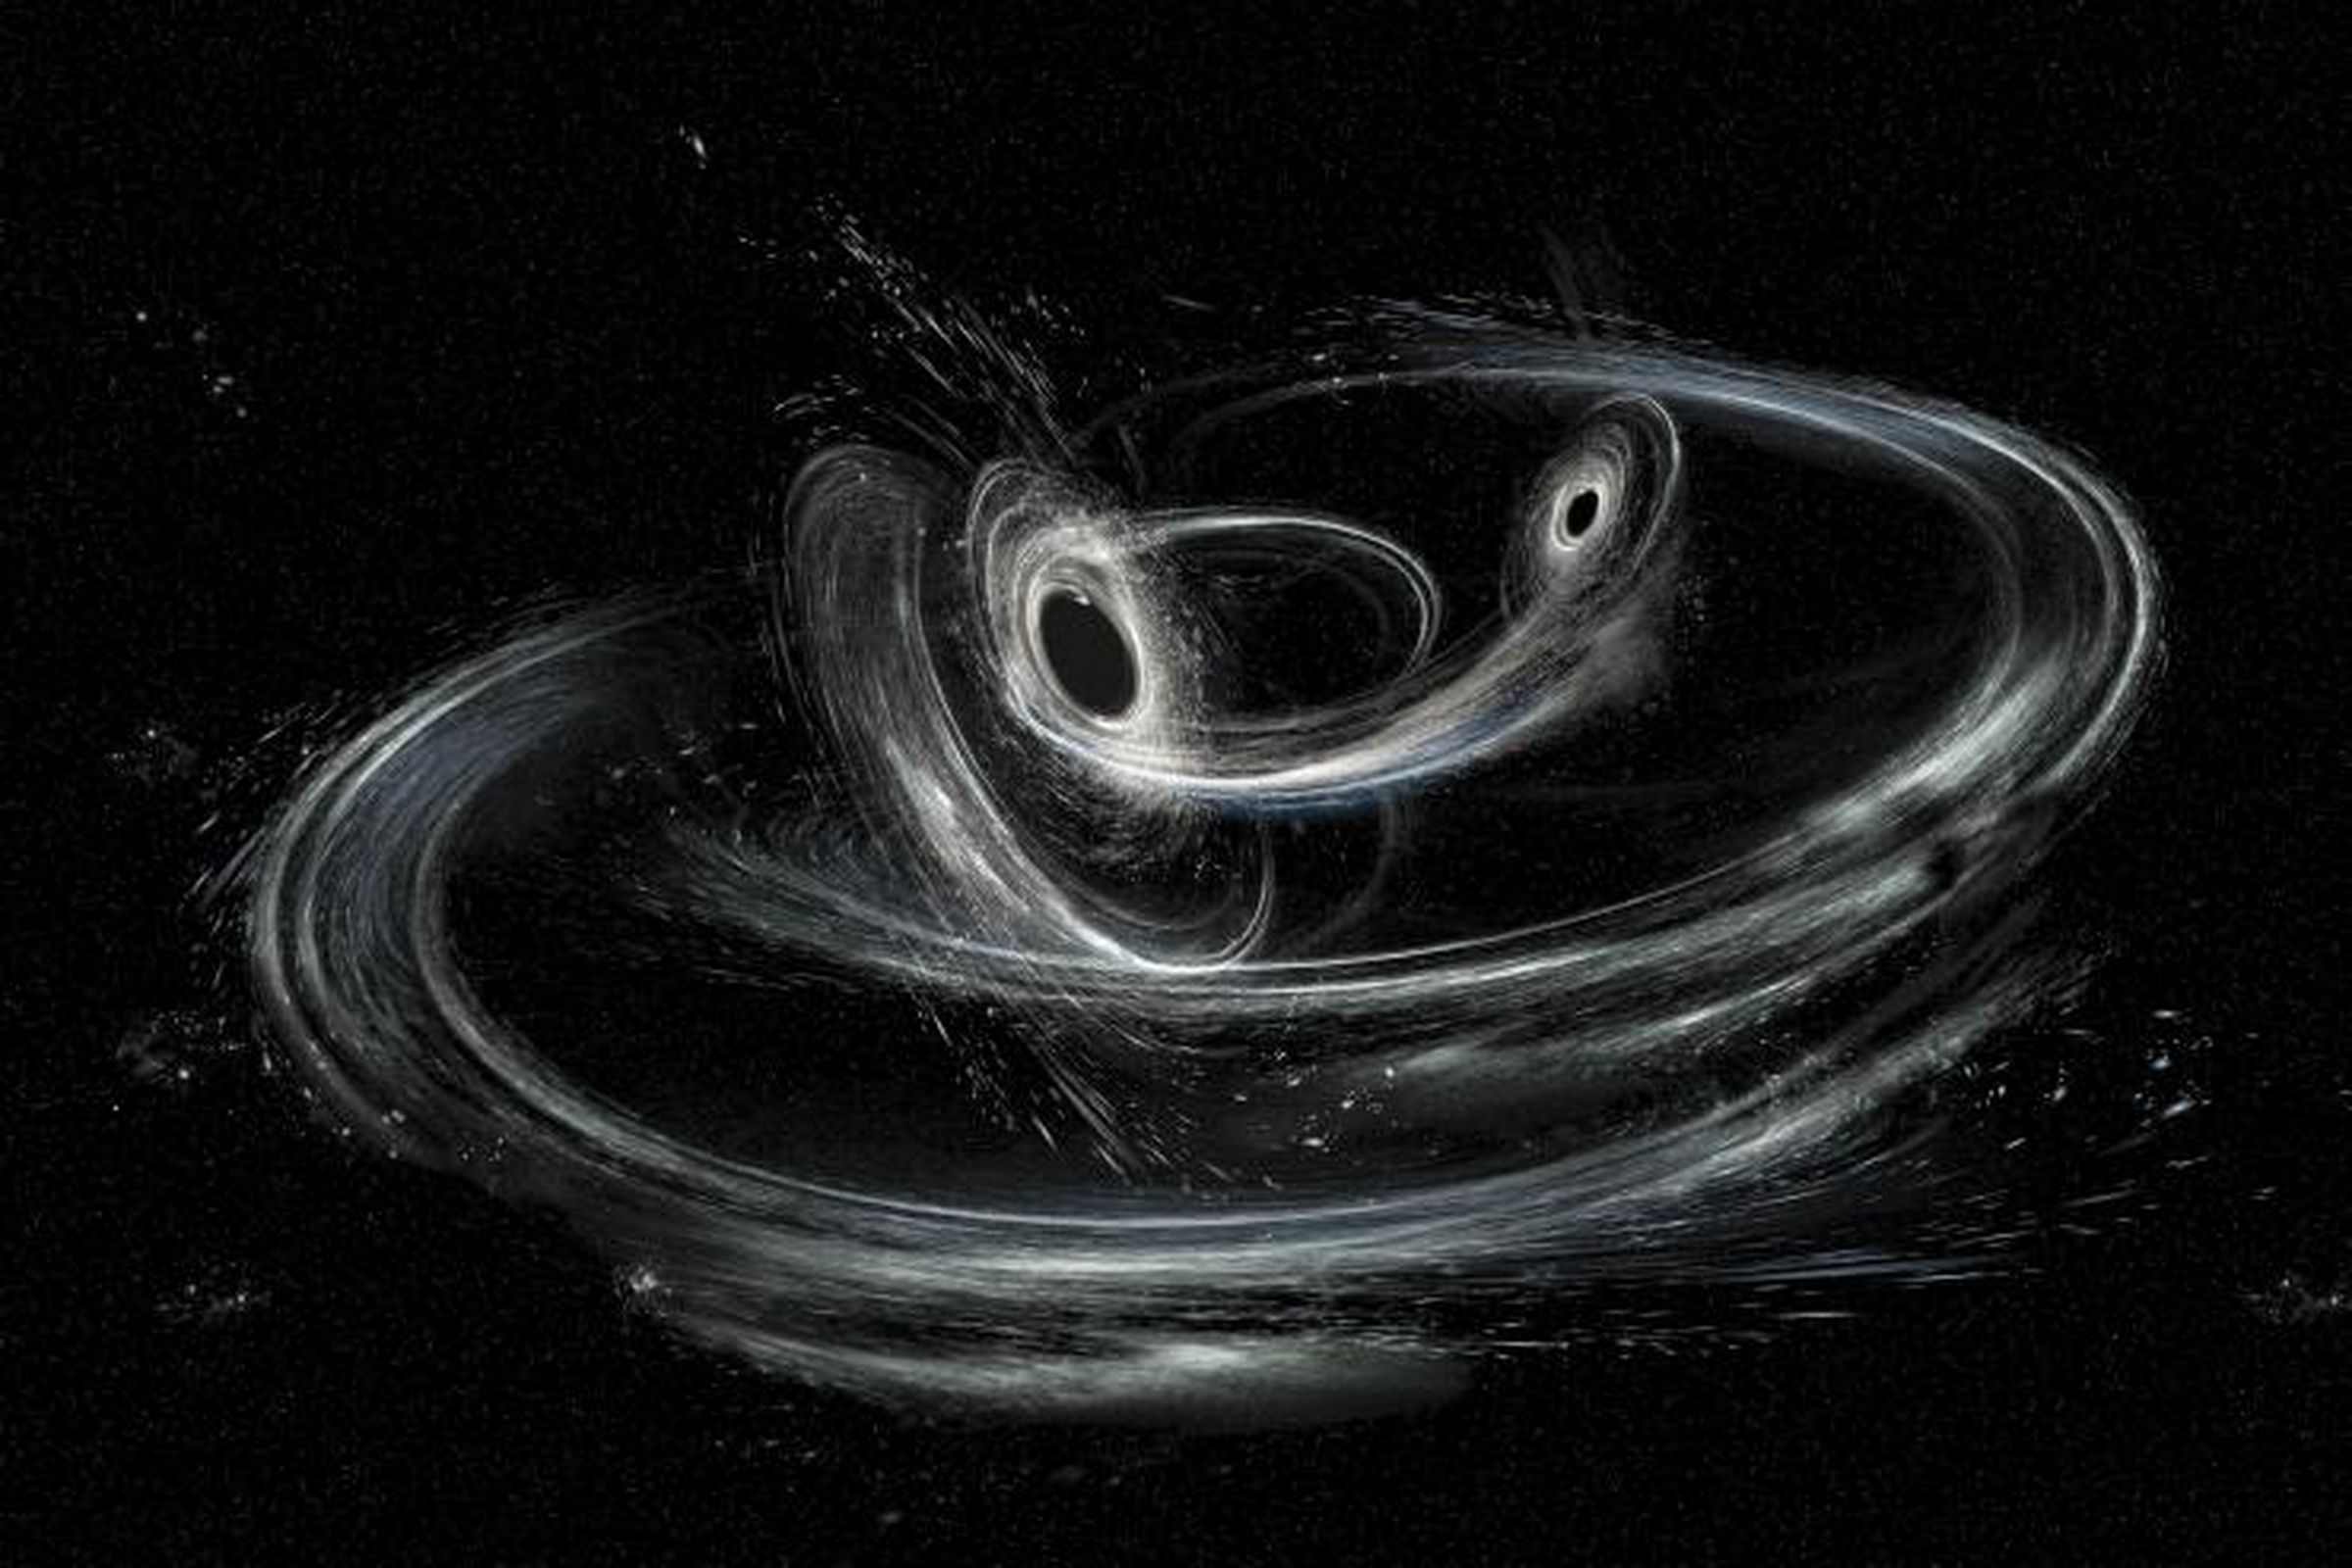 An artist’s illustration of two black holes merging.